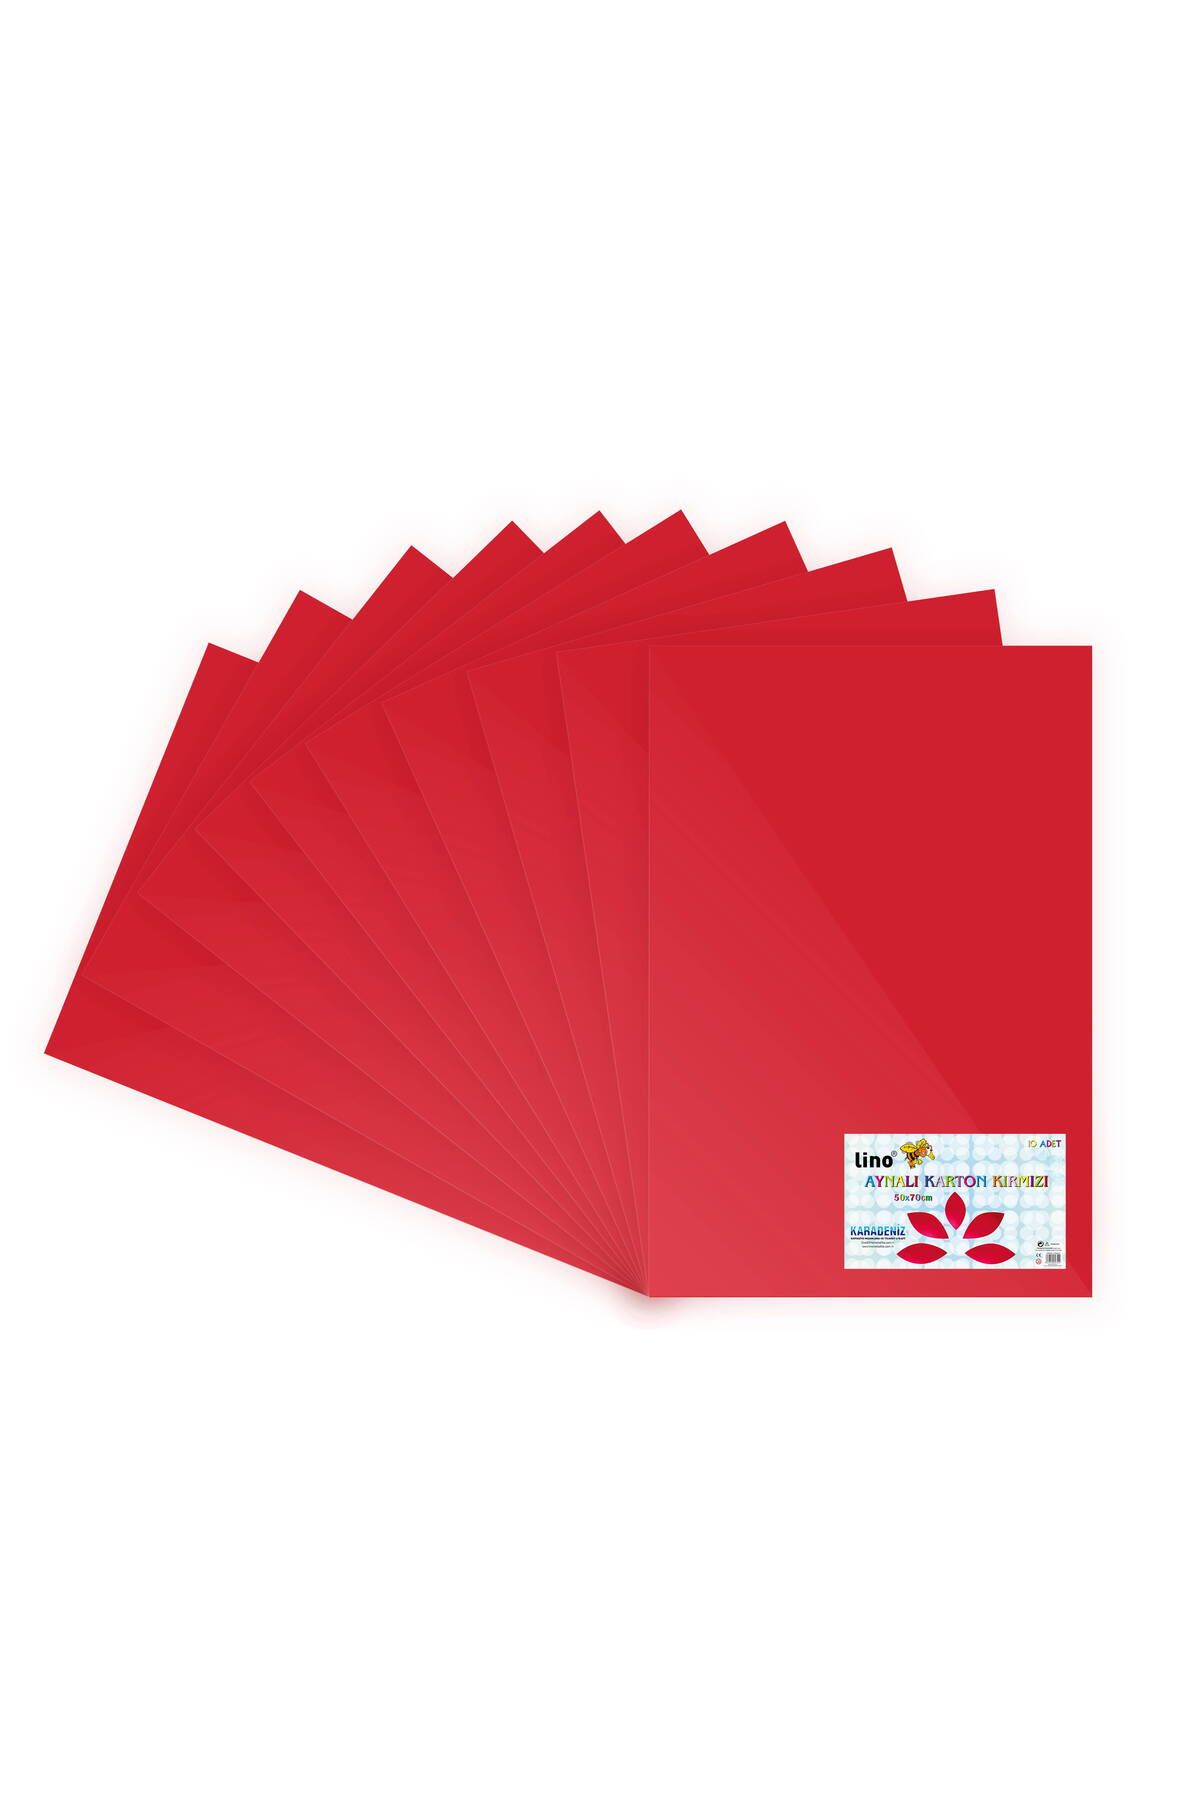 Lino Aynalı (METALİK) Karton Kırmızı 10lu (50X70 CM.)